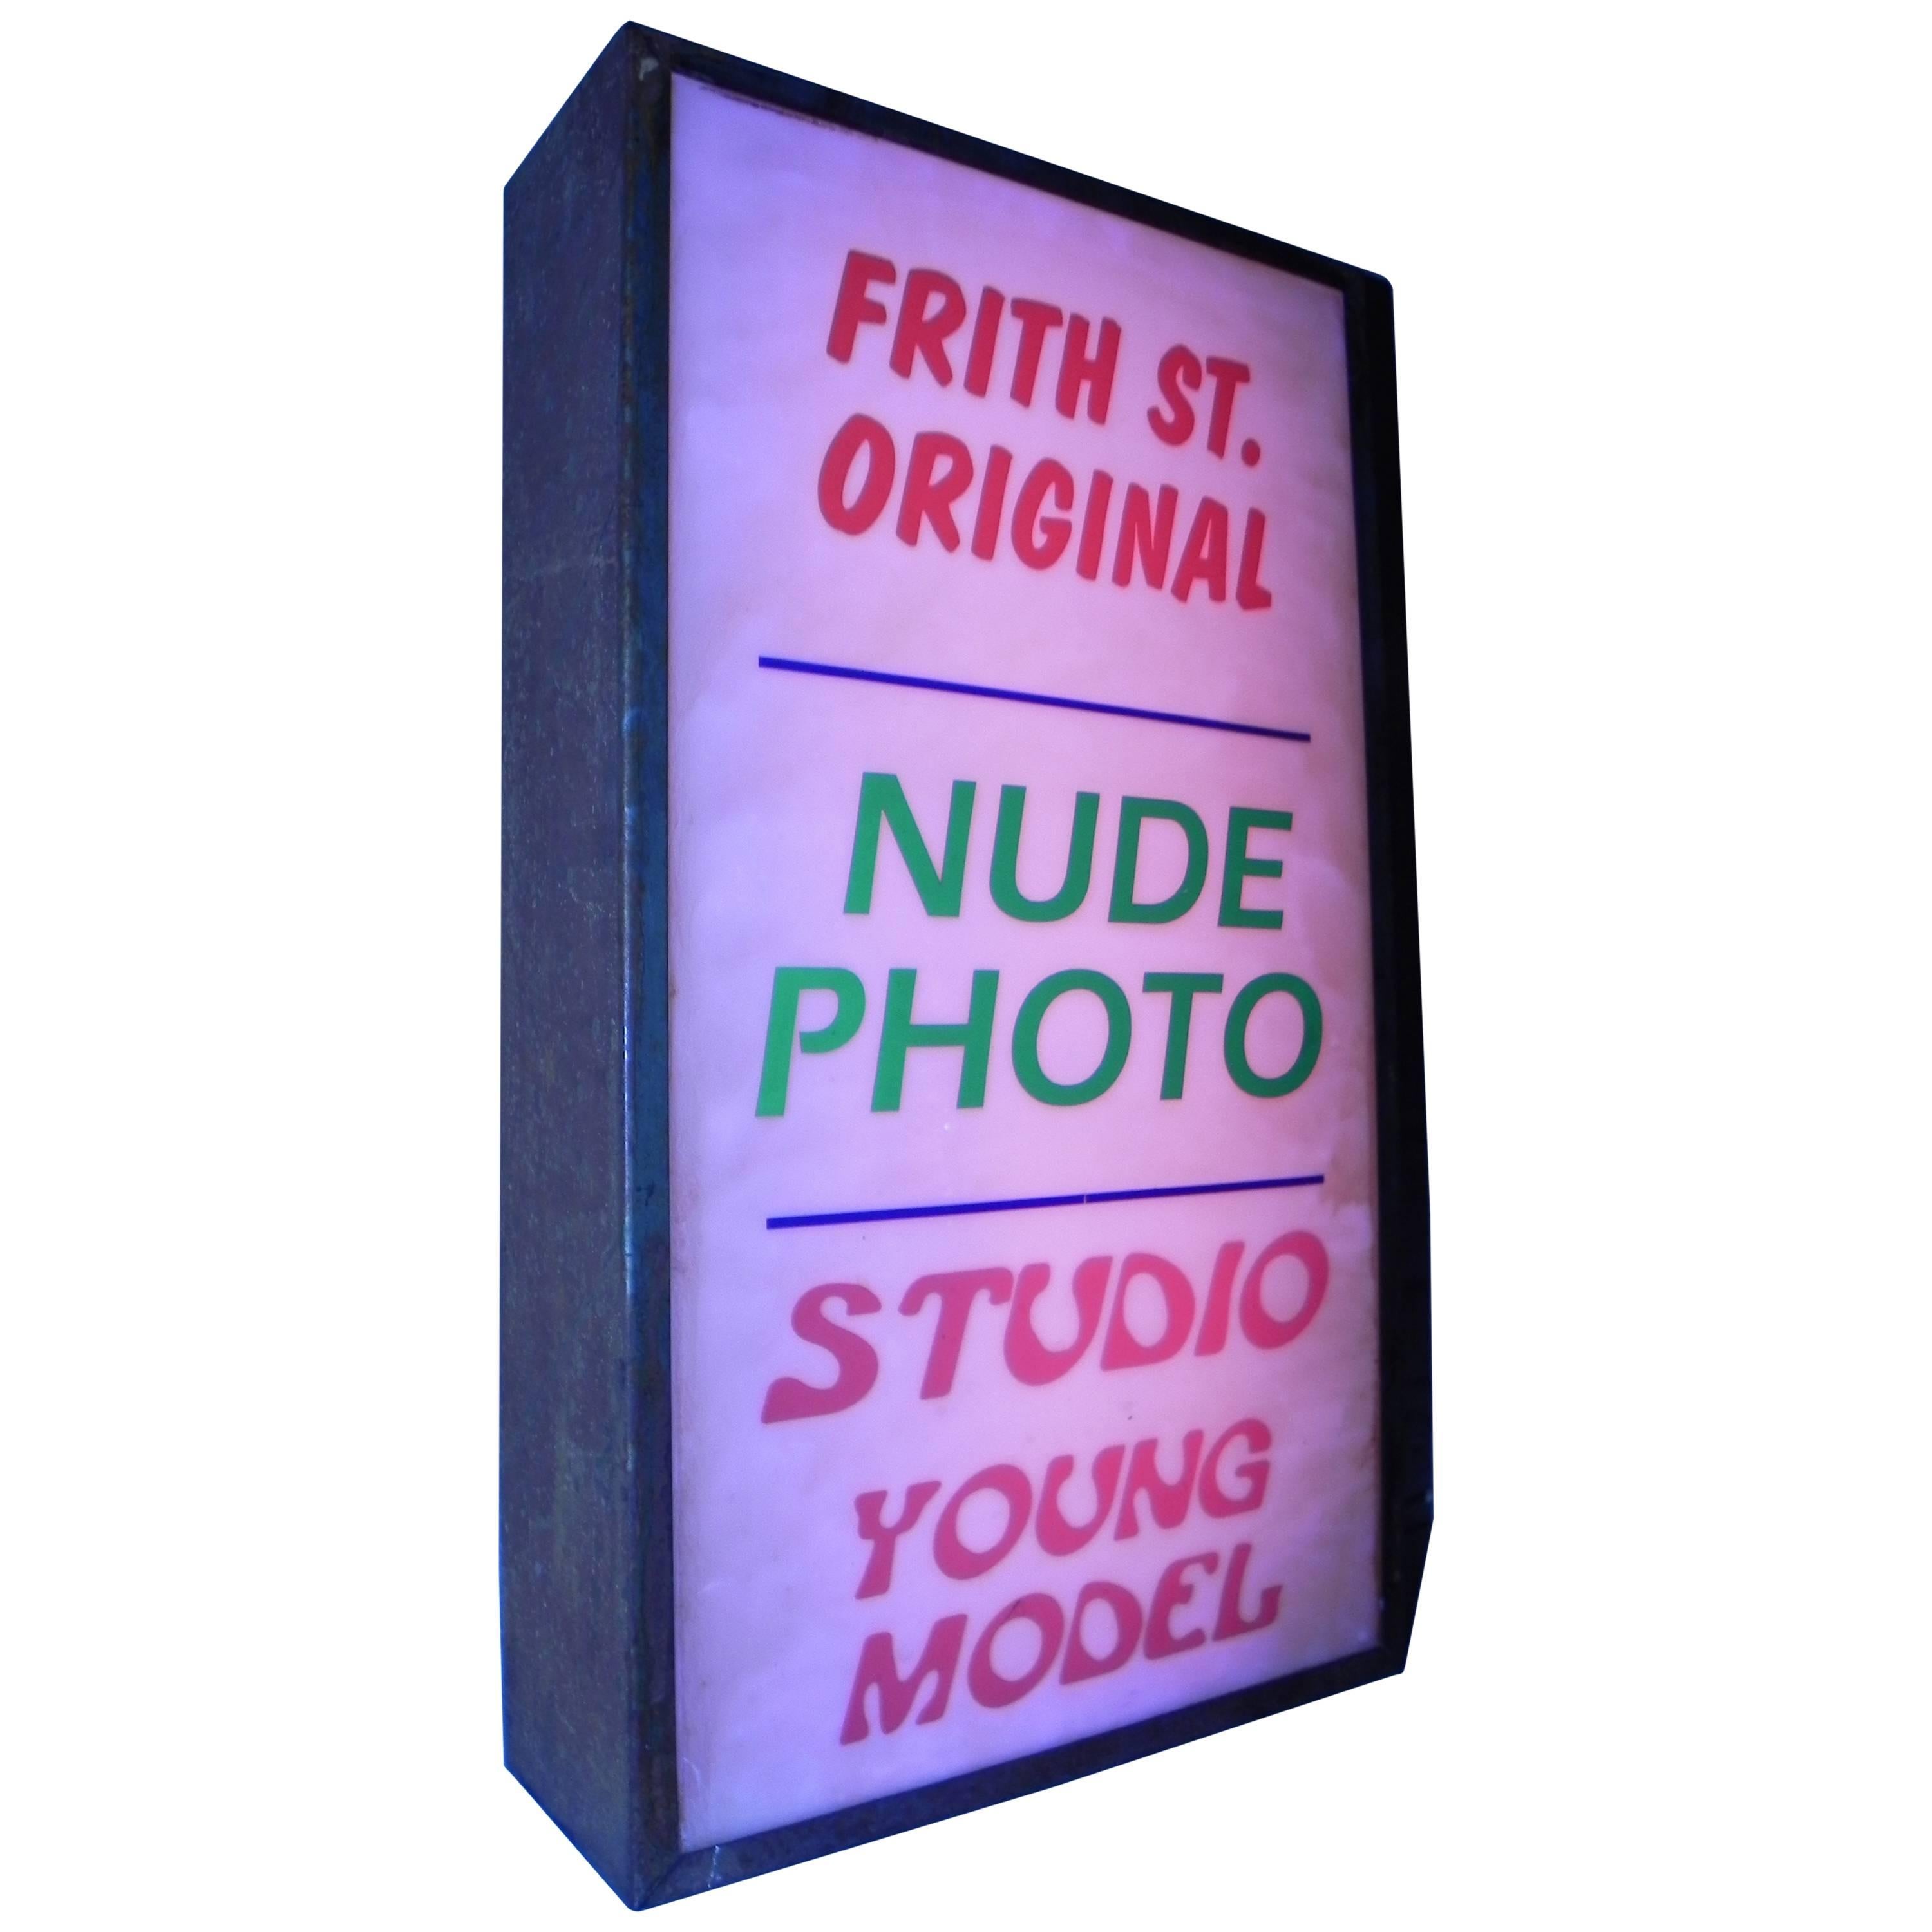 God's Own Junkyard, "Frith St. Original" Light Box For Sale